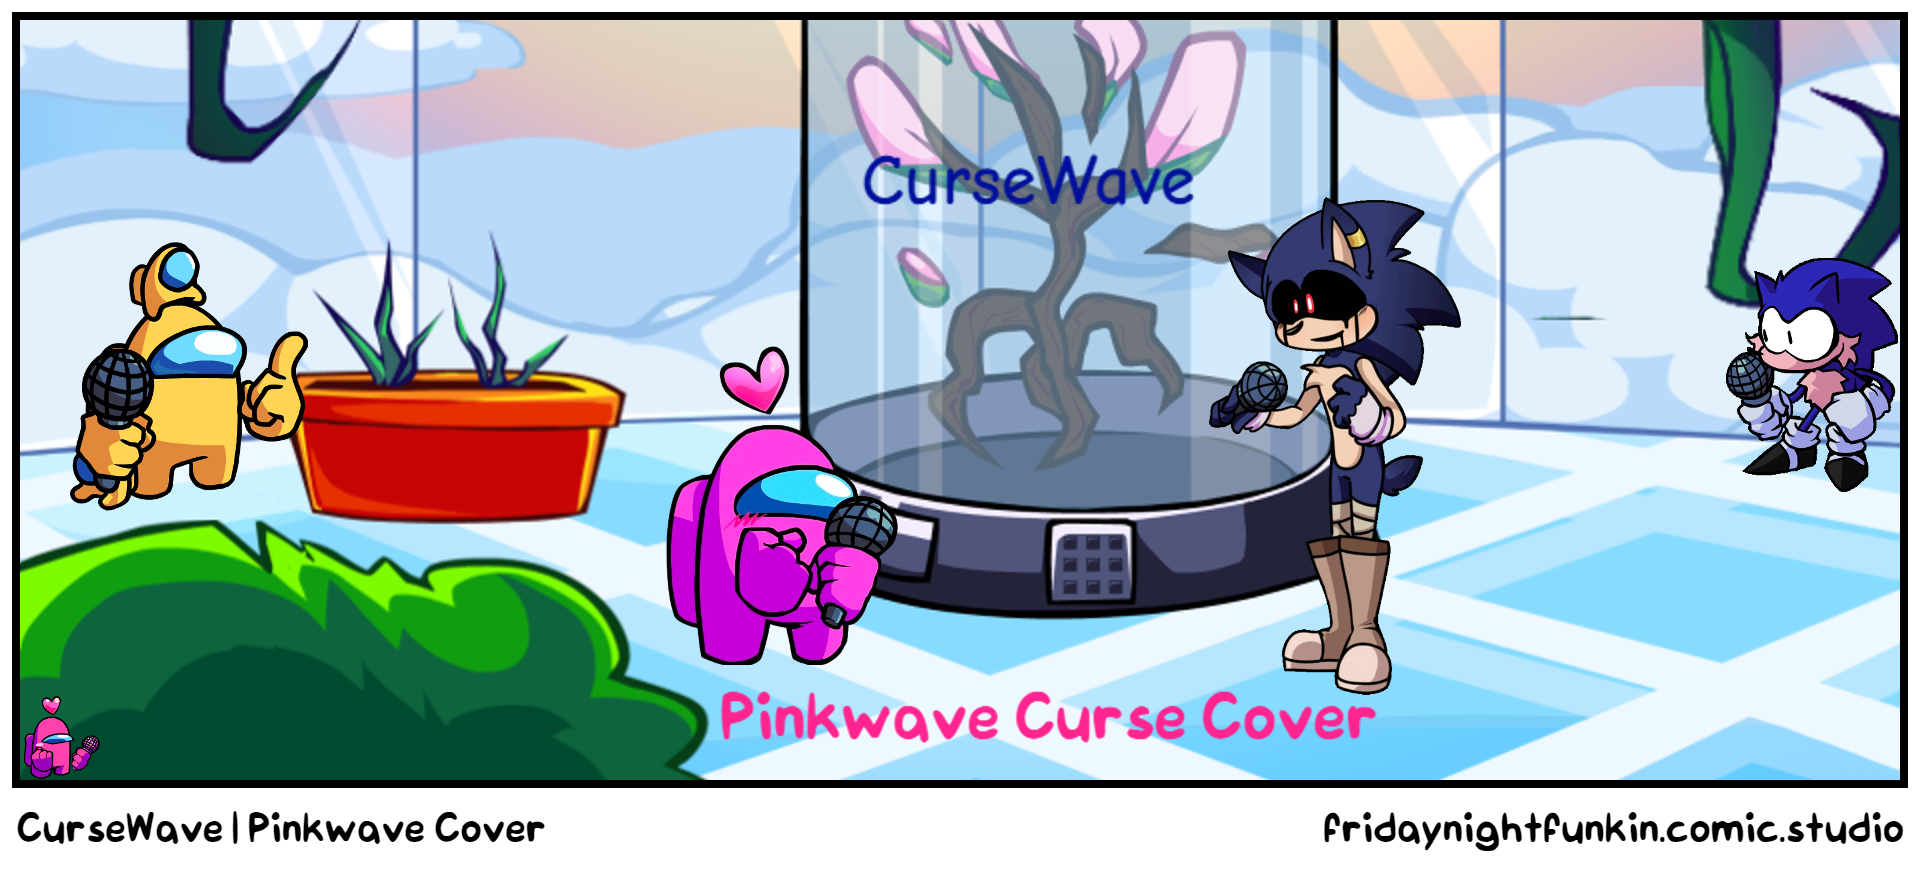 CurseWave | Pinkwave Cover